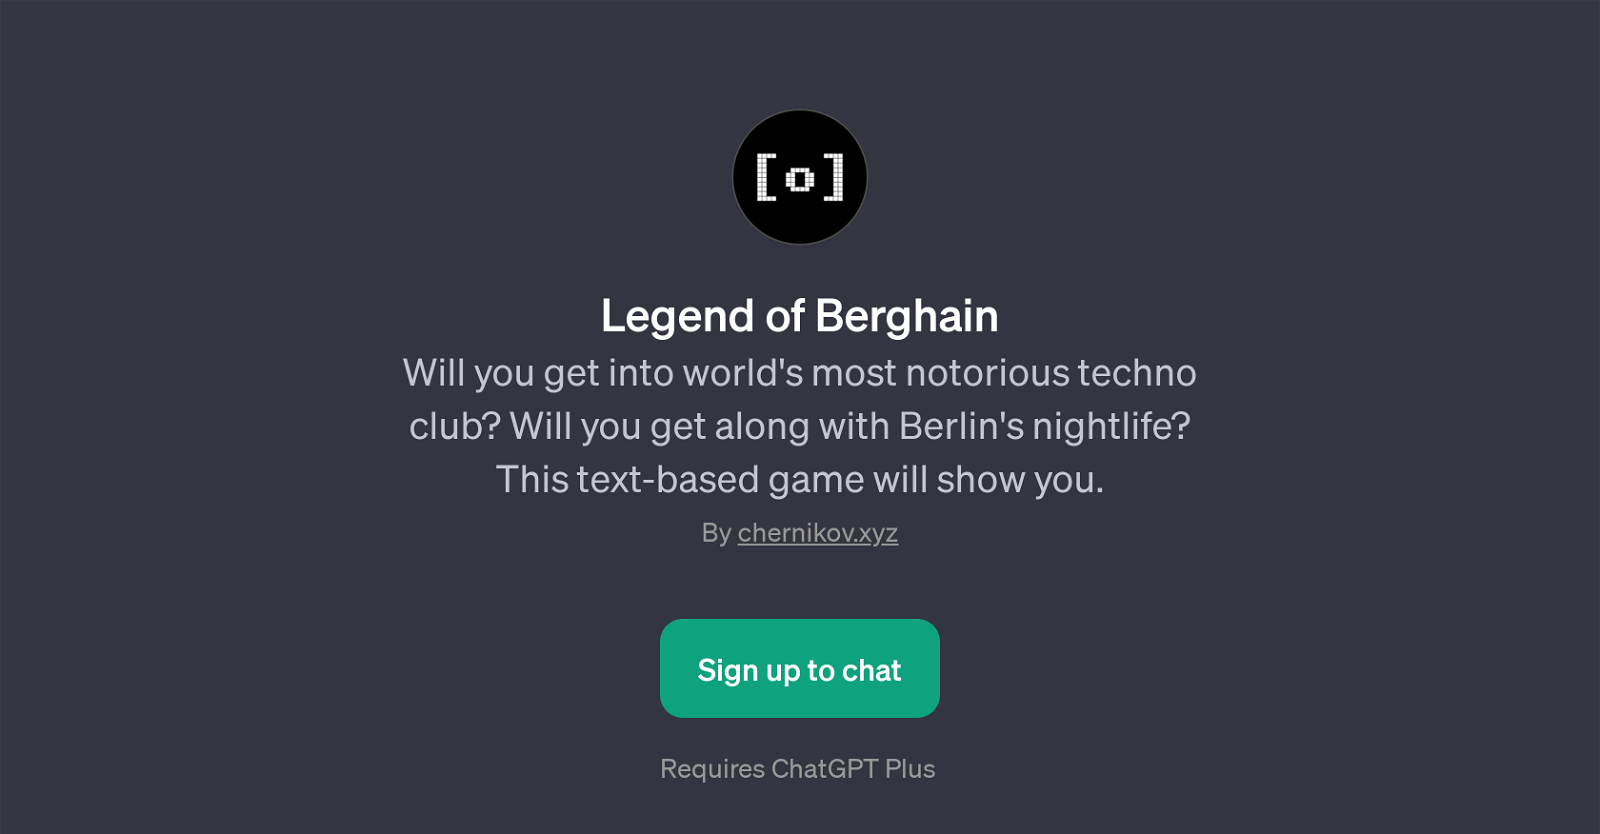 Legend of Berghain website